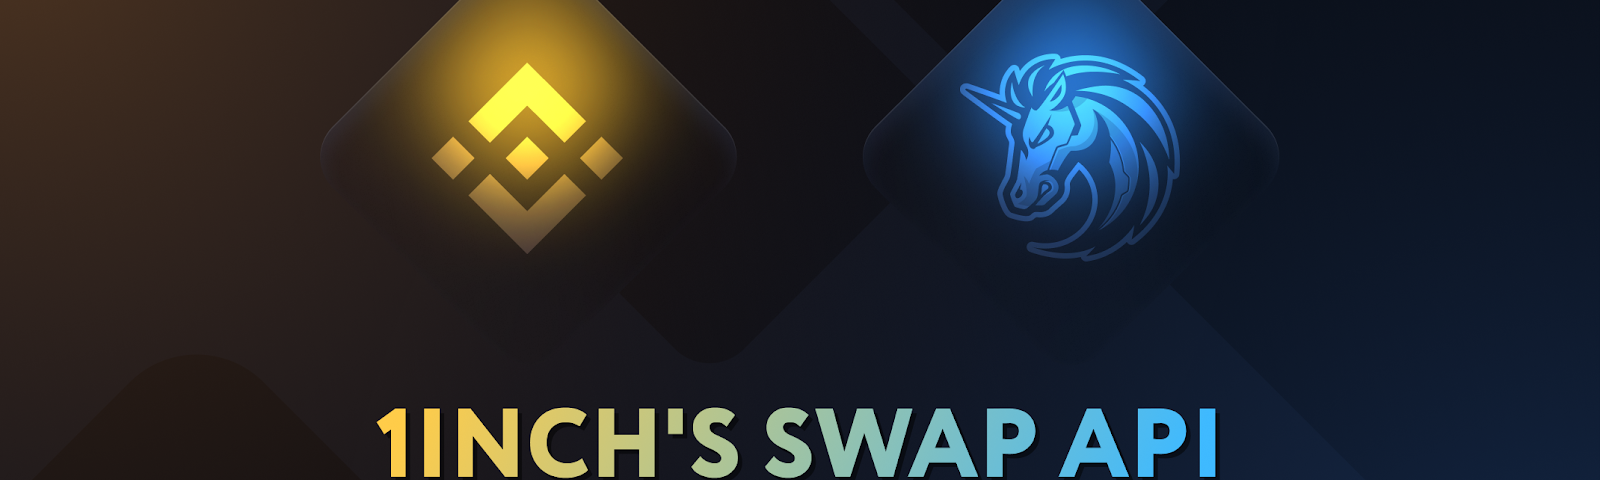 1inch’s swap API for Binance Smart Chain